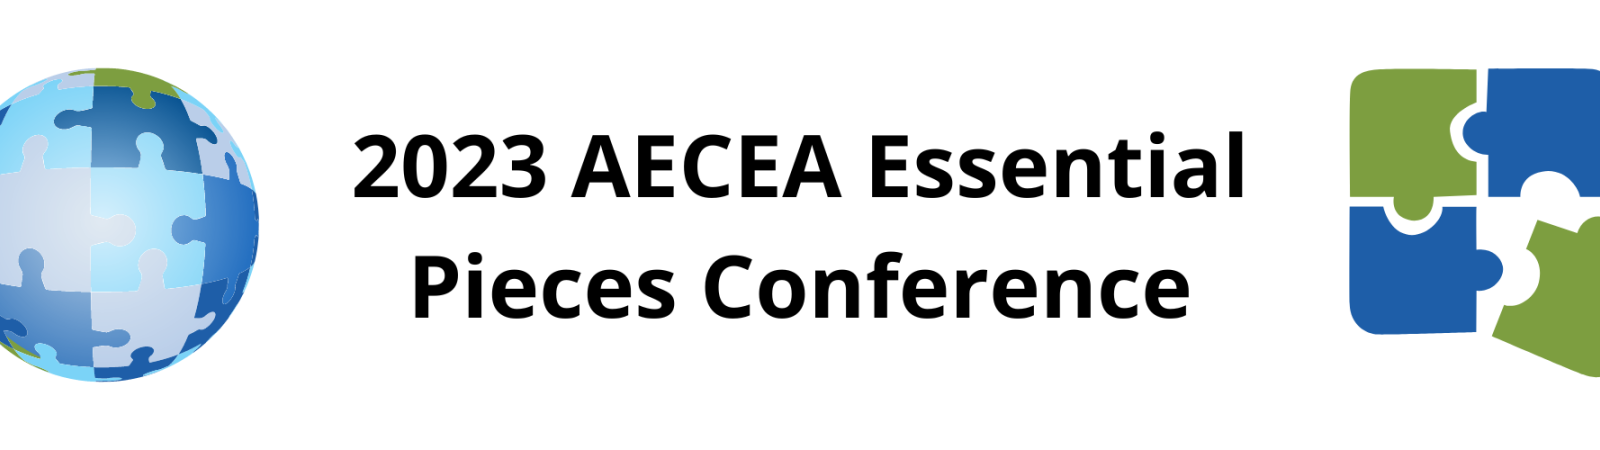 2023 essential piece conference header